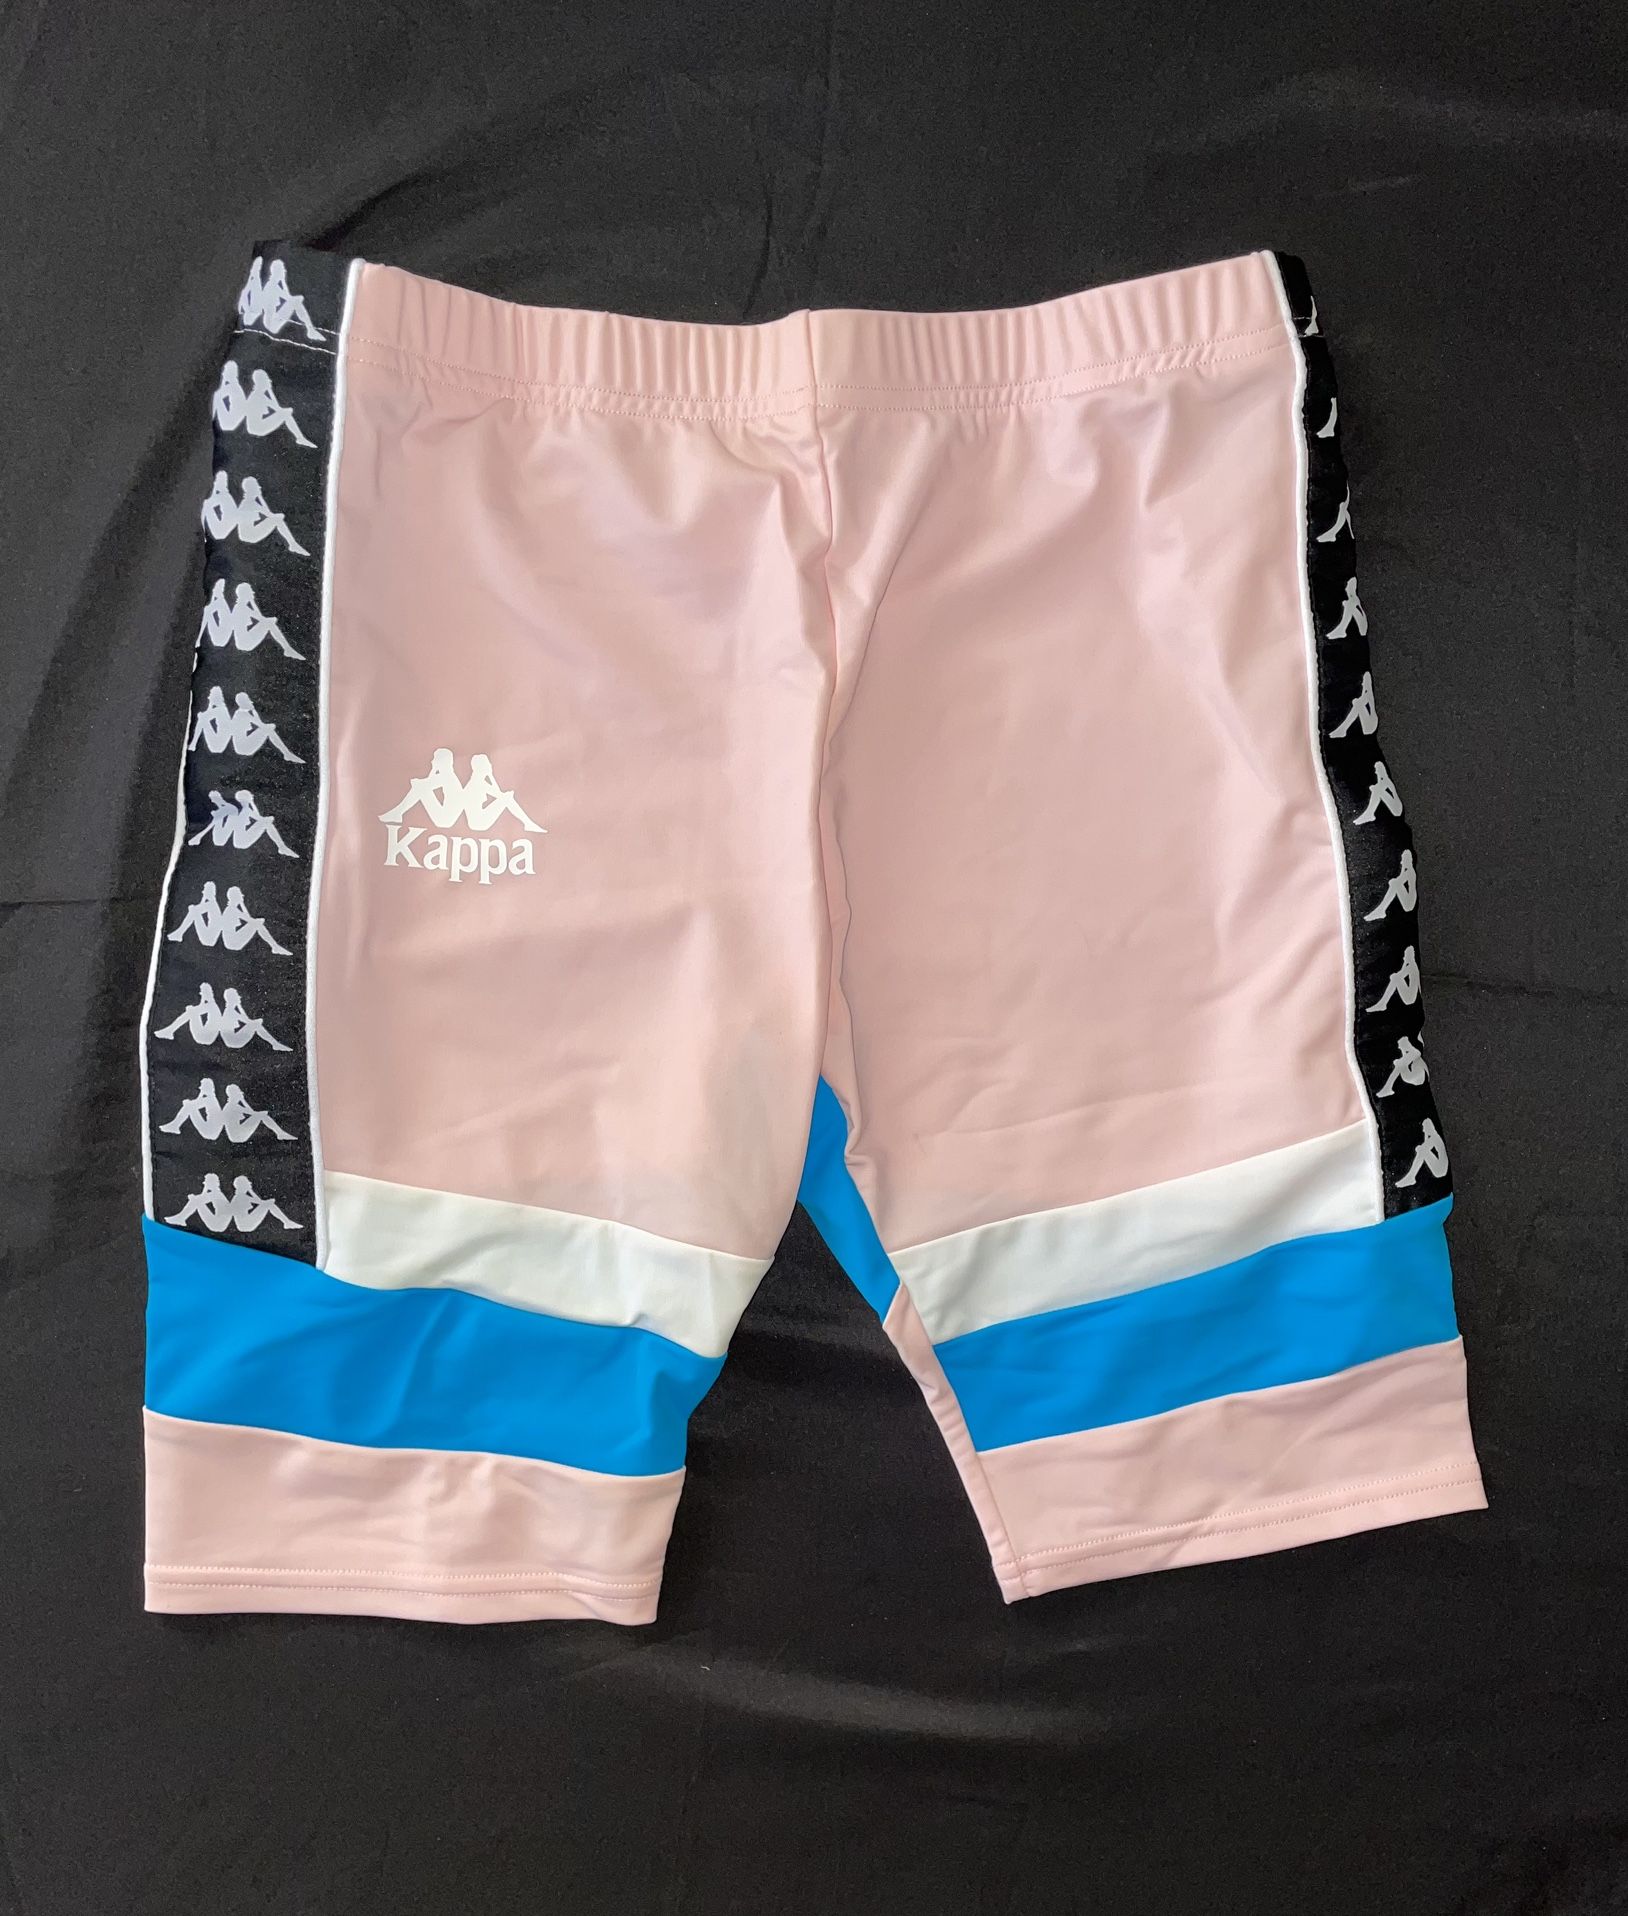 New Kappa Authentic Football Eve Bike Shorts Soft Pink White Blue Womens Size XS